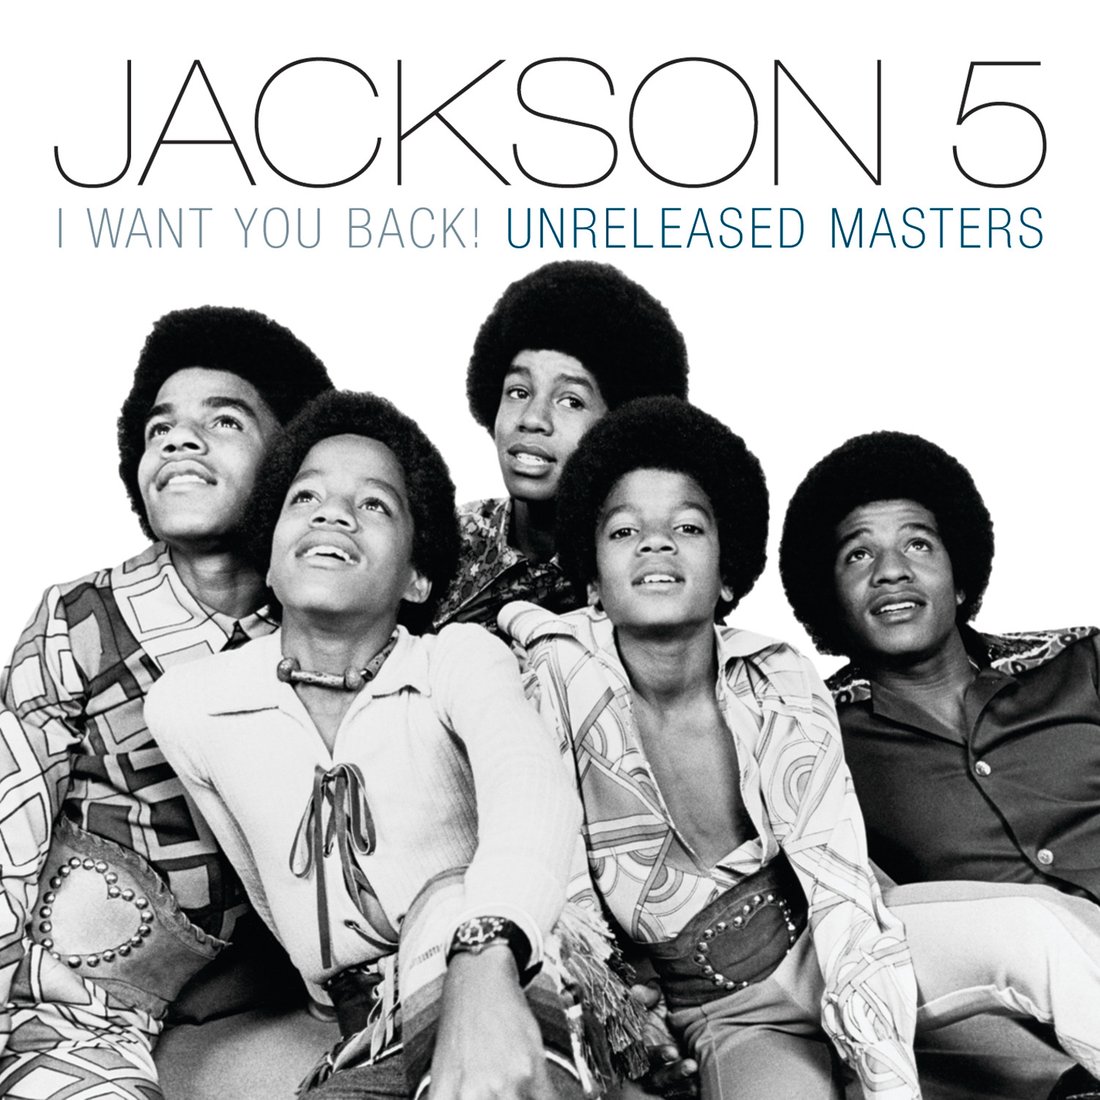 Jackson 5 Album 2009 UNRELEASED MASTERS.